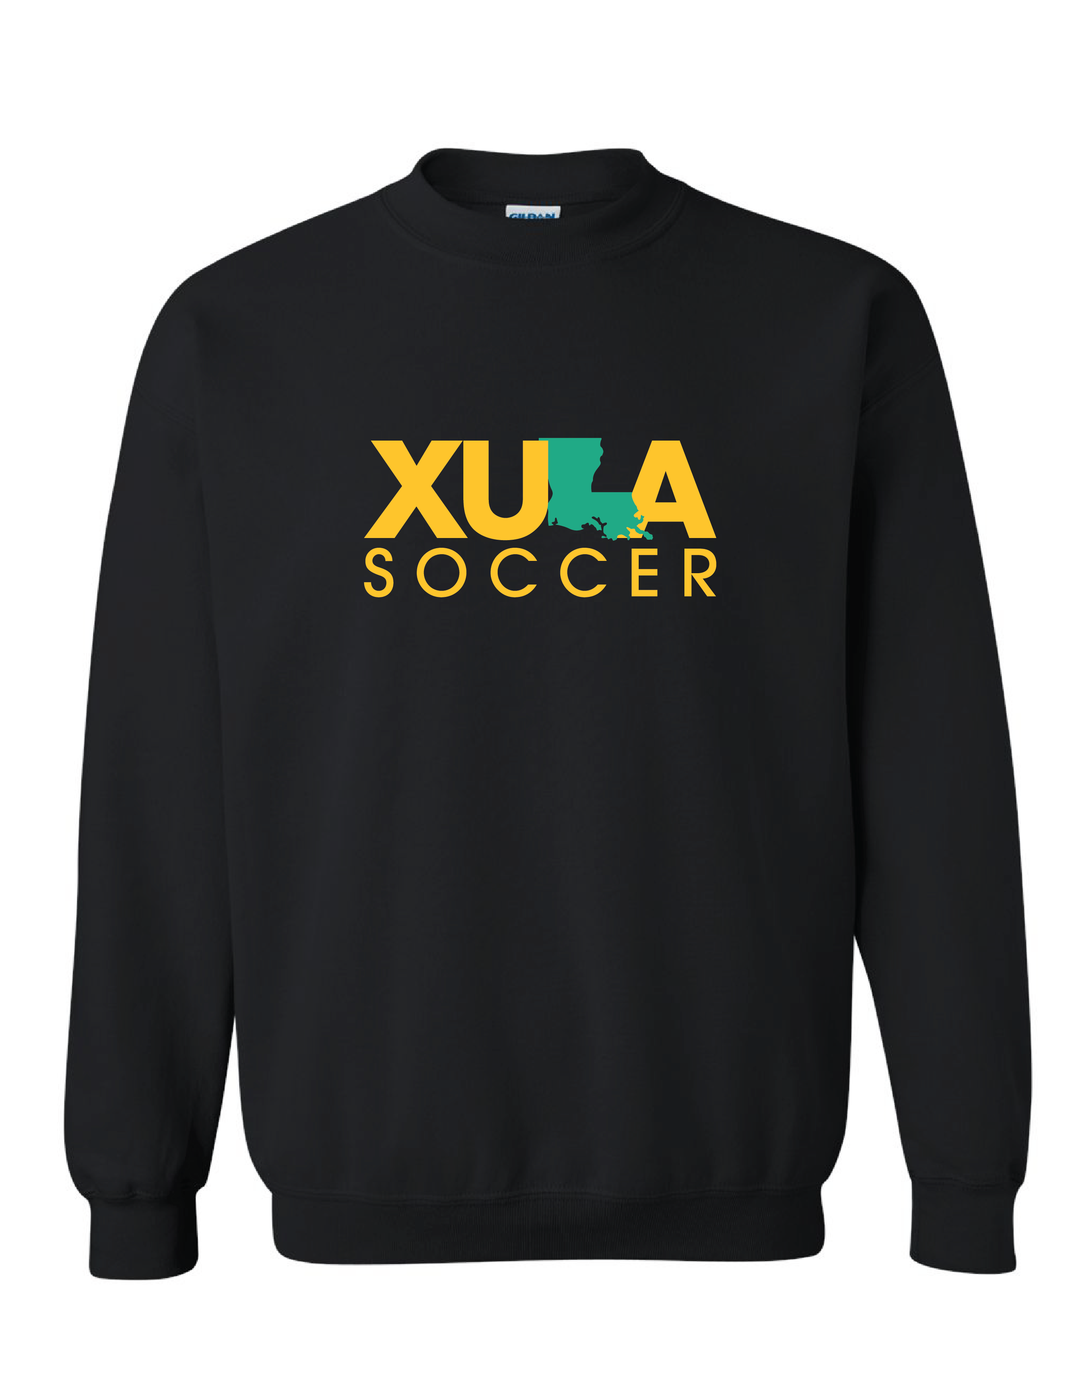 XULA Soccer Crewneck Sweatshirt Xavier University Black Mens Small - Third Coast Soccer